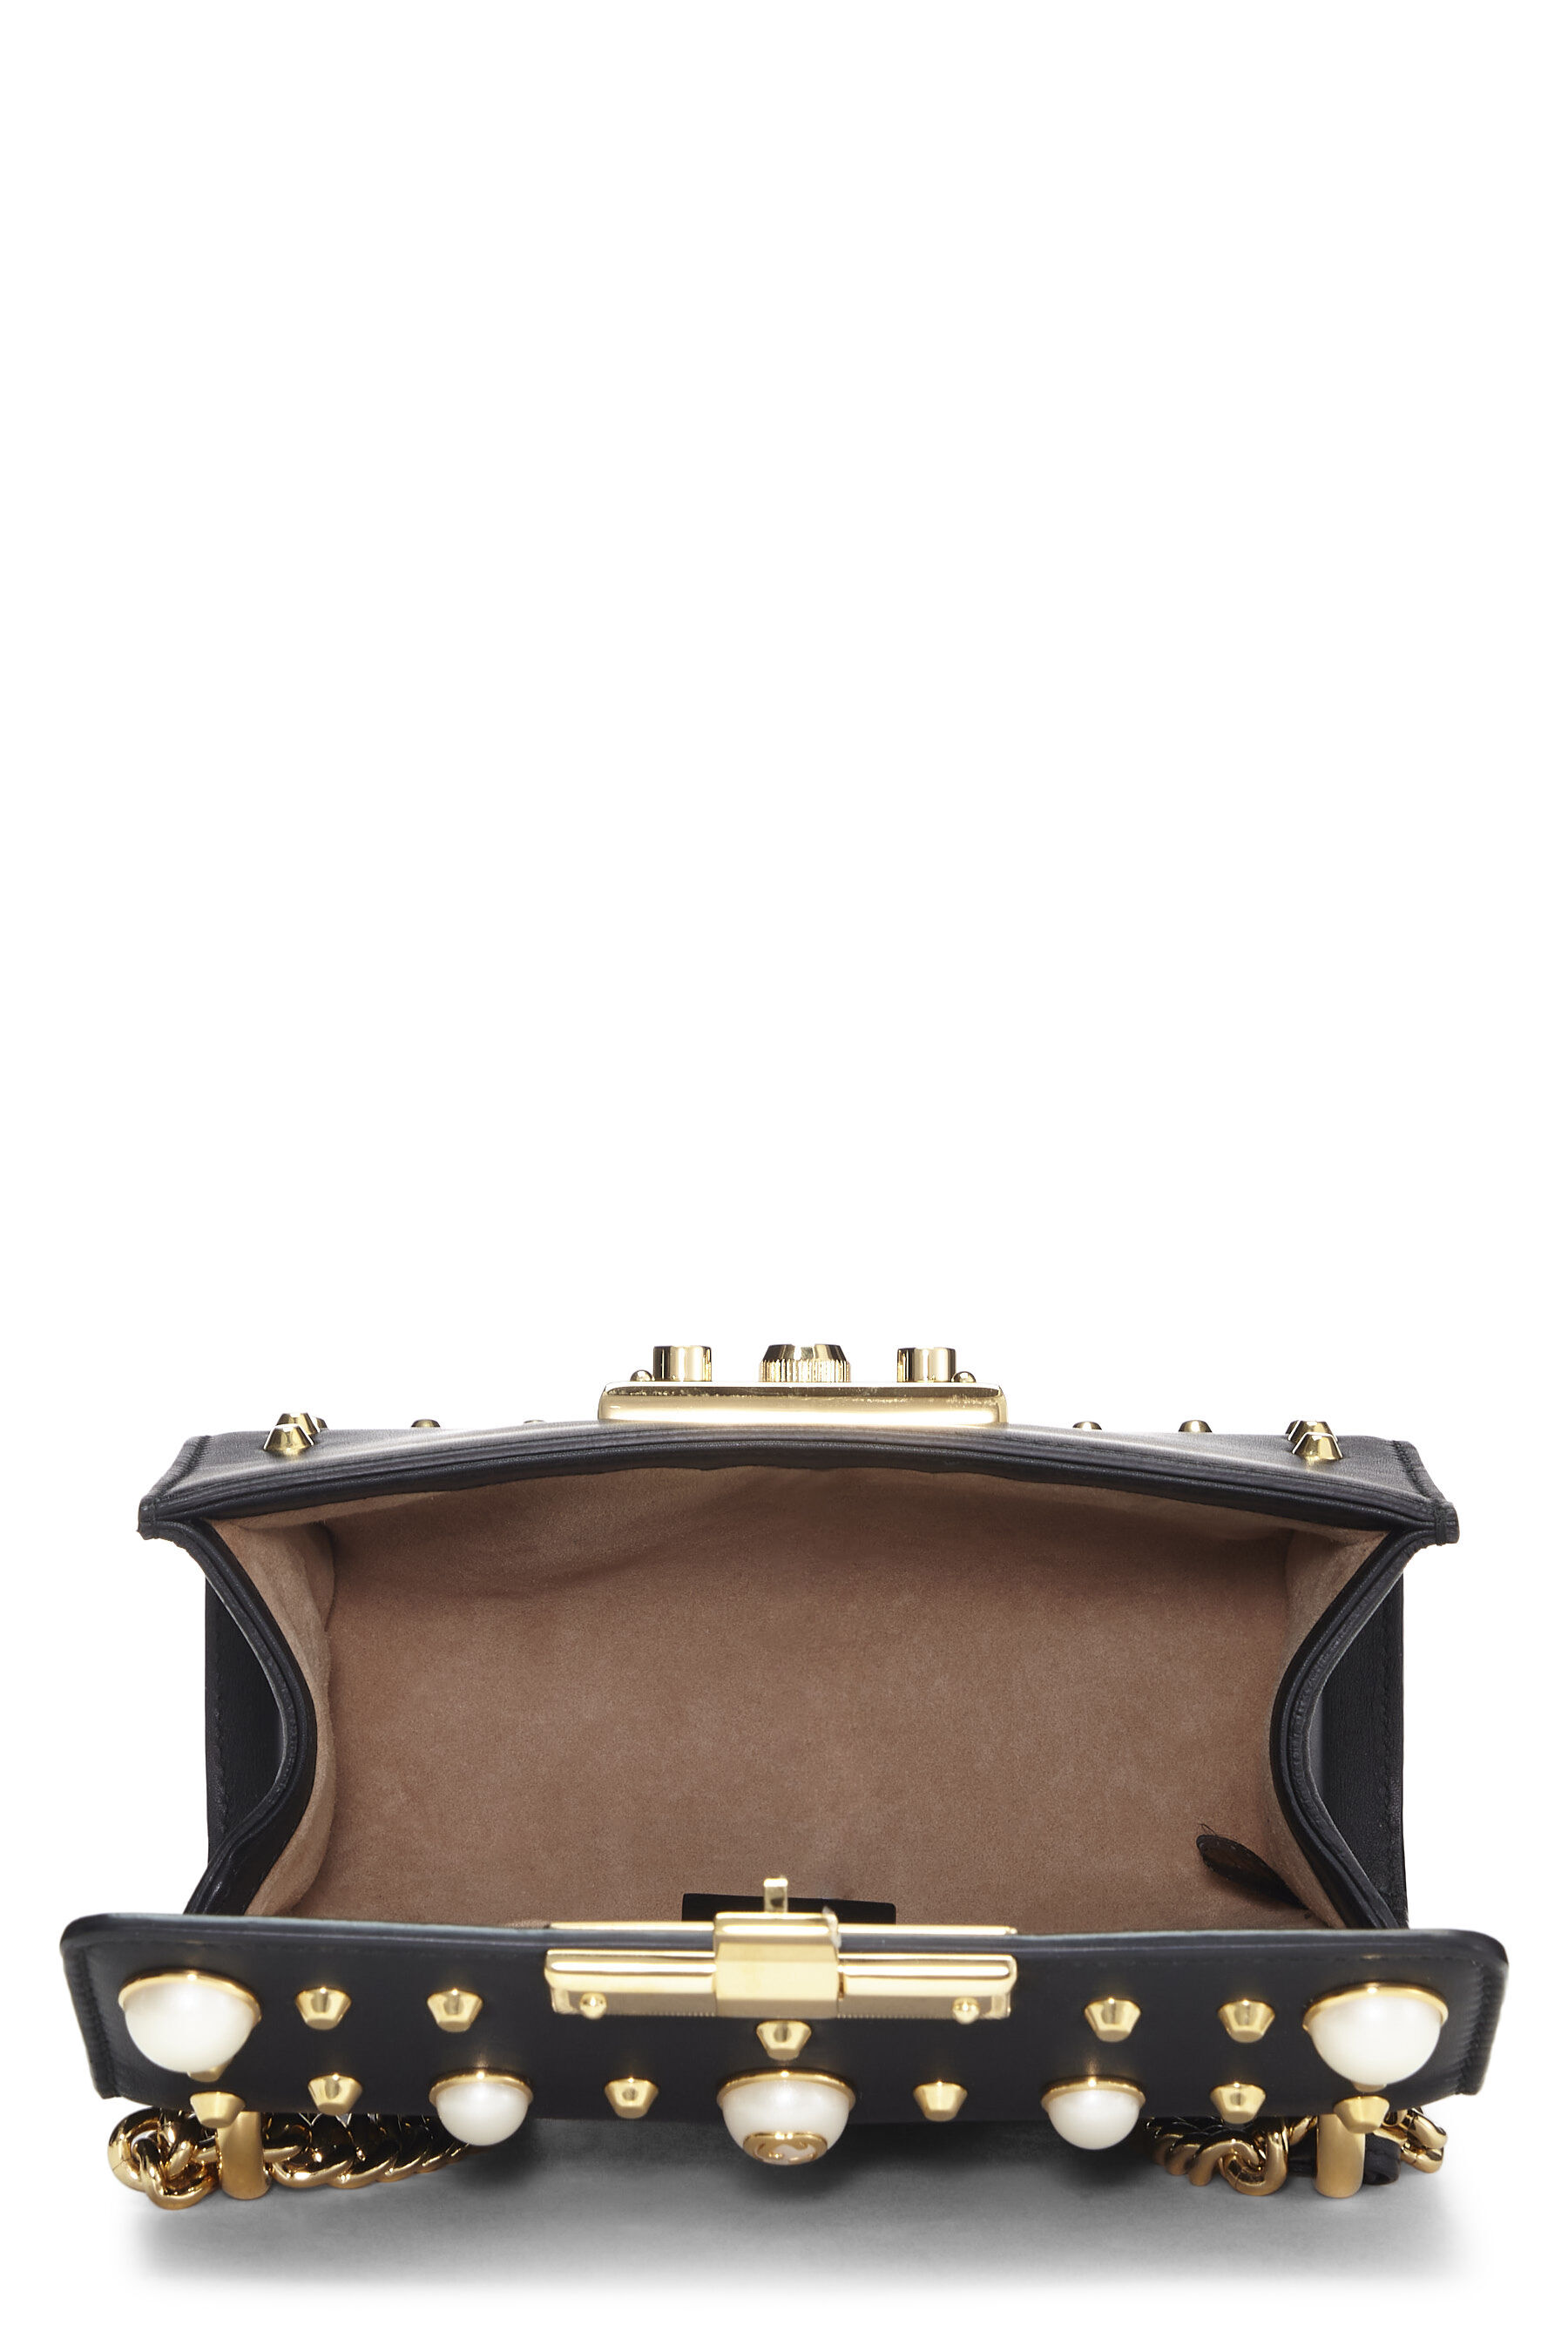 GALPADA Studded Handbag Bag Black Crossbody Rivet Shoulder Leather Tote  Handbags : Clothing, Shoes & Jewelry - Amazon.com